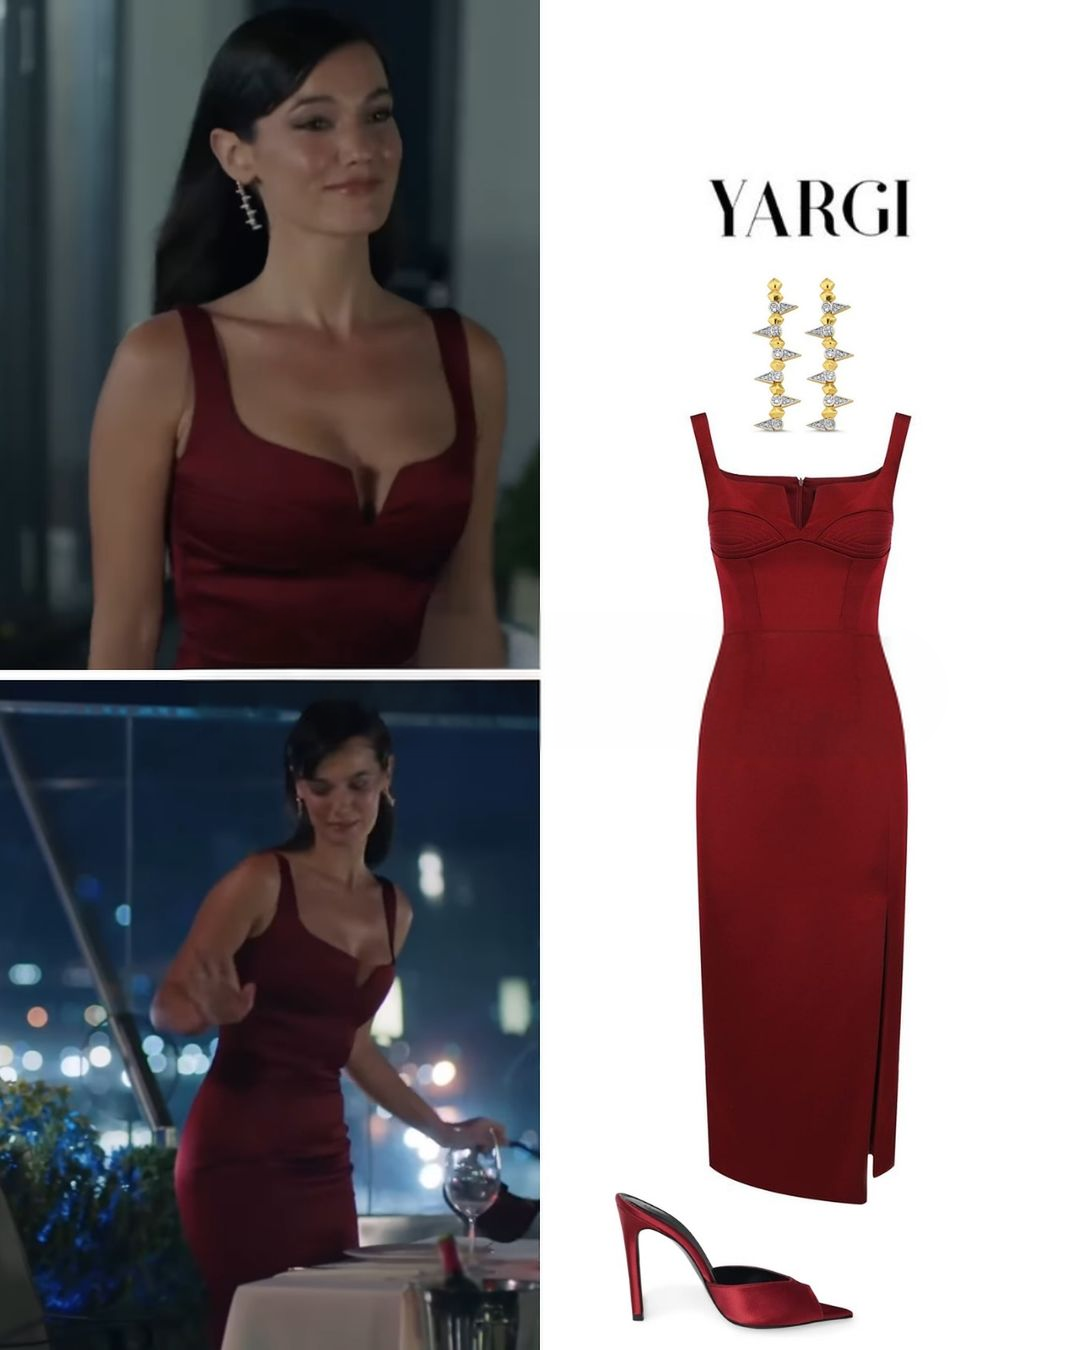 The red dress worn by Pınar Deniz